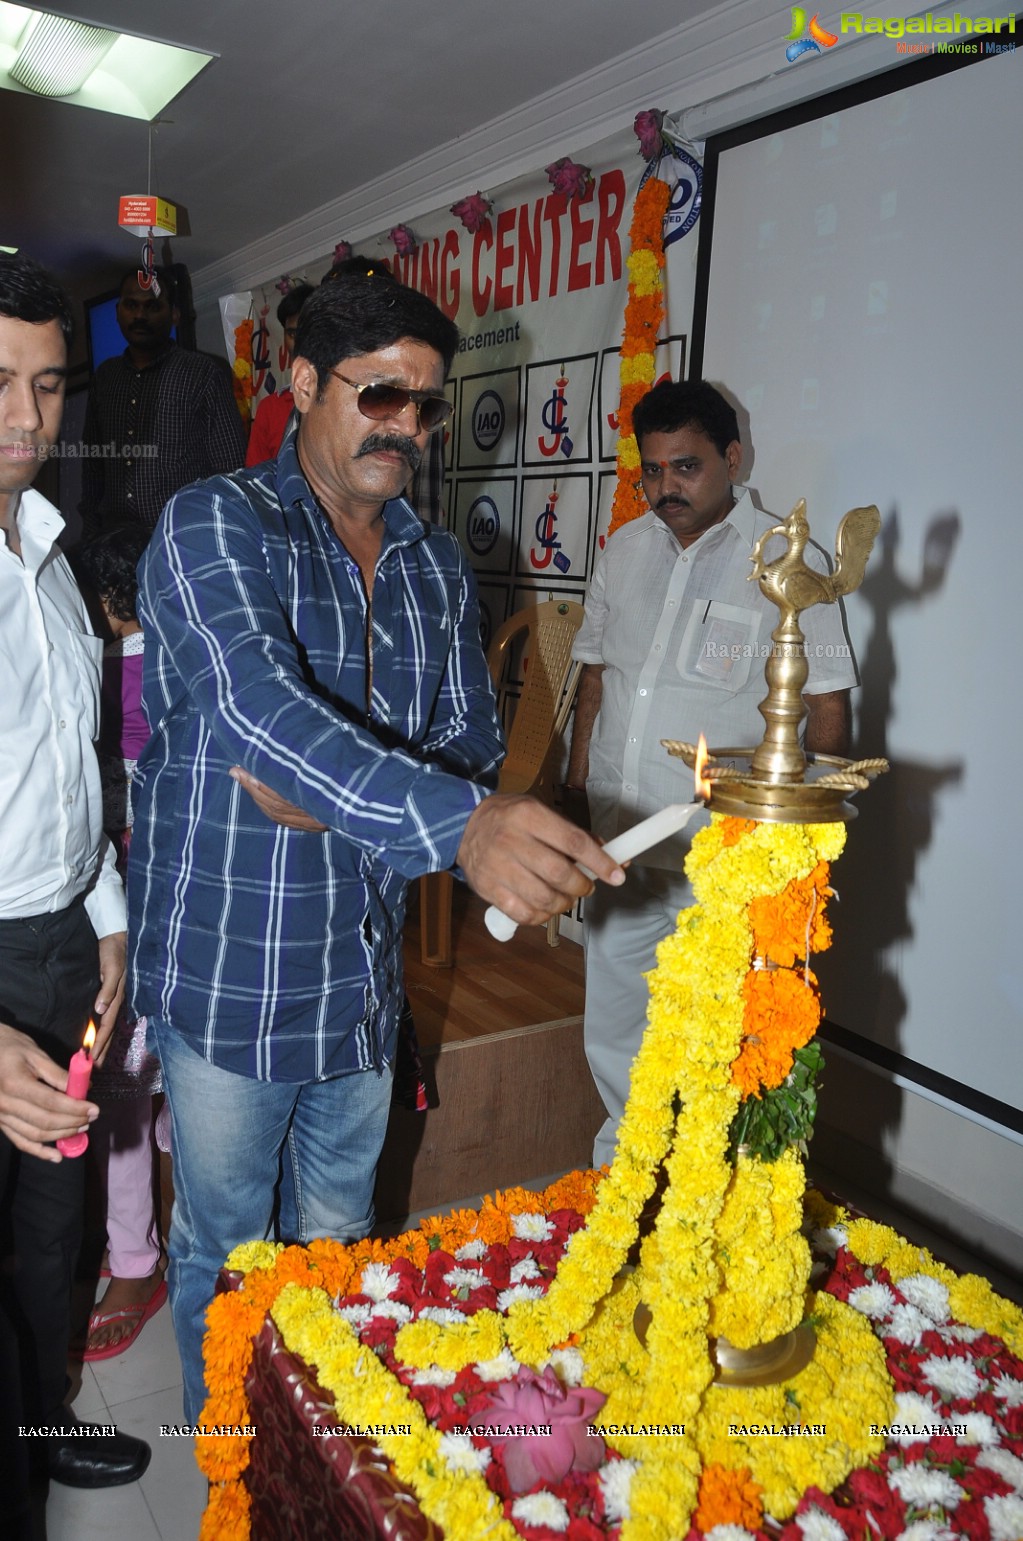 Srihari launches Java Learning Center, Hyderabad